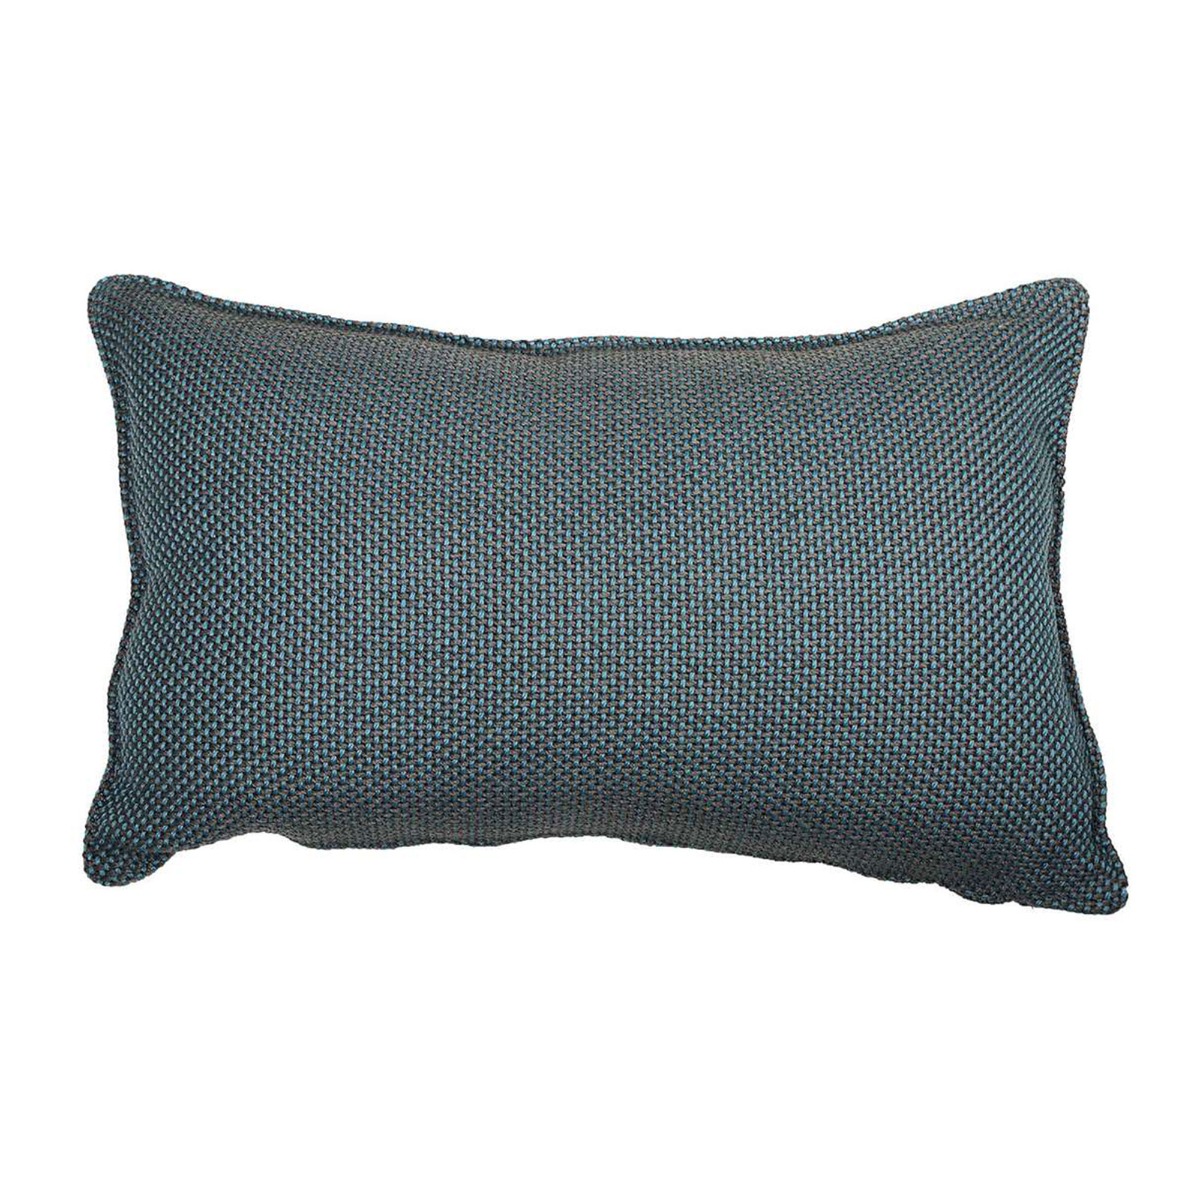 Cane Line Focus Scatter Cushion 52x32x12cm, Square, Blue | Barker & Stonehouse